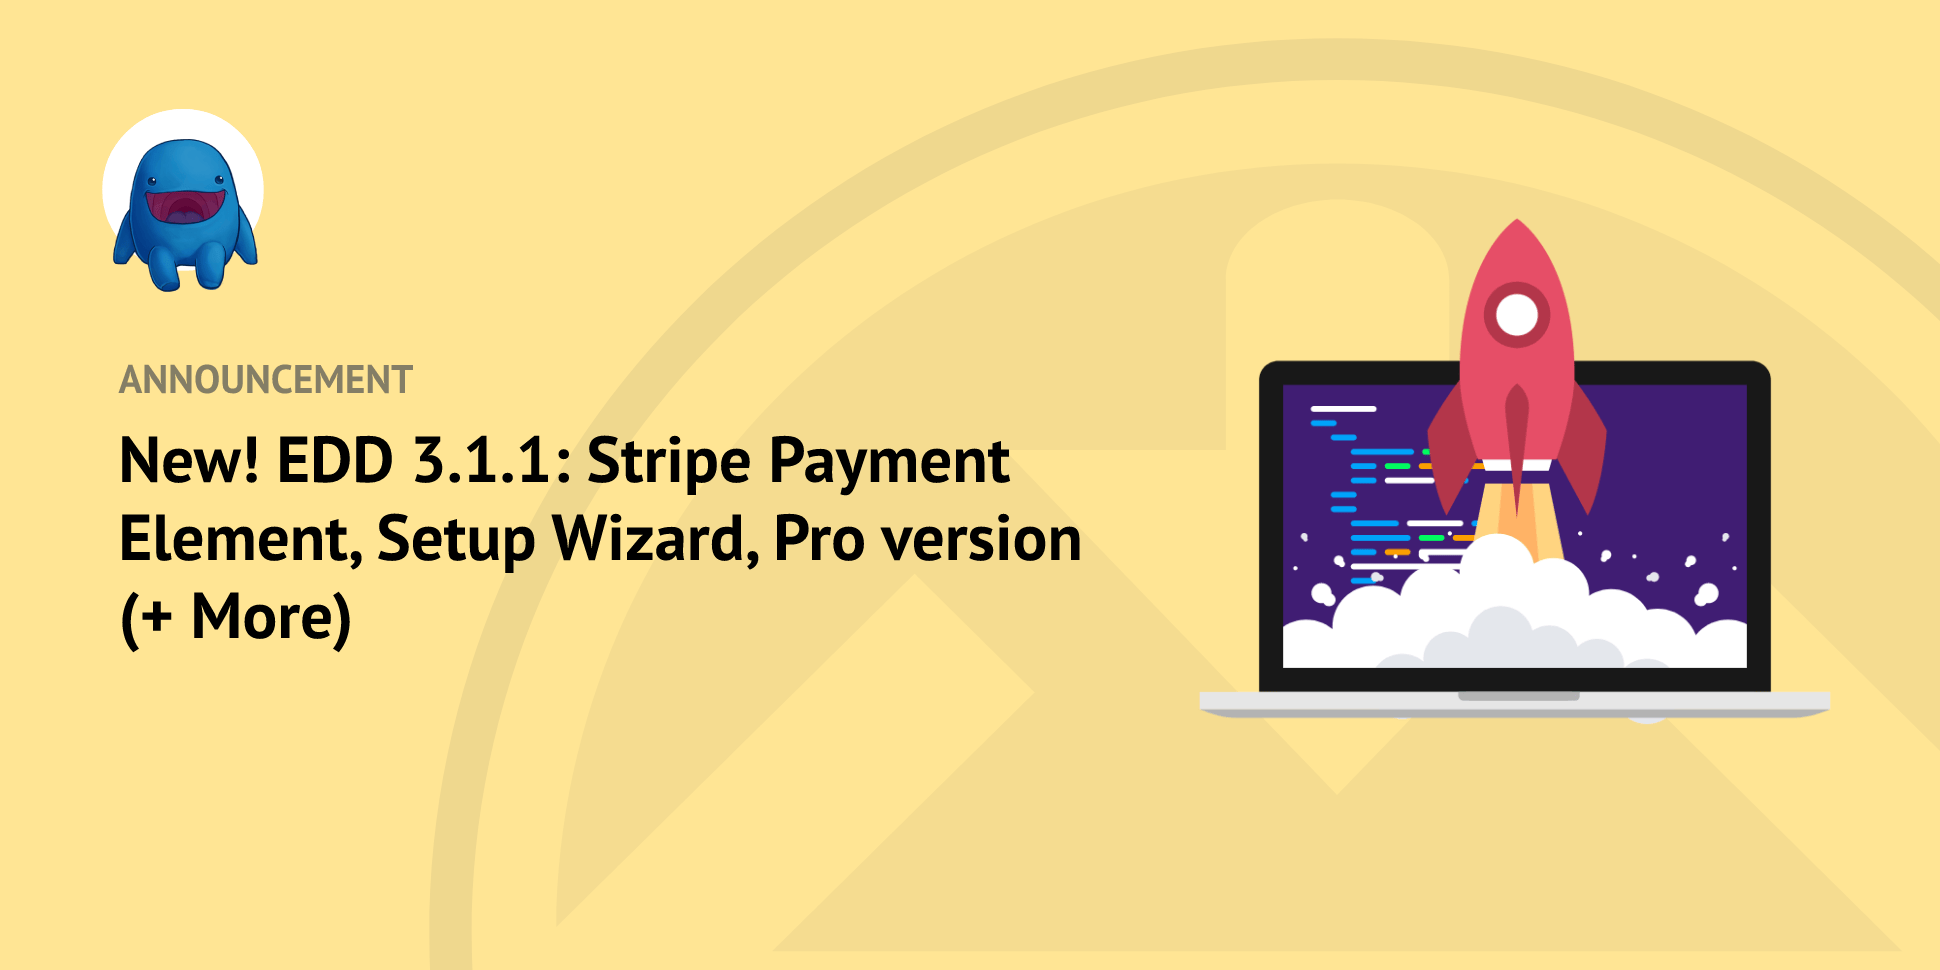 New! EDD 3.1.1 Release: Stripe Payment Element Integration, EDD Pro, Onboarding Wizard + More